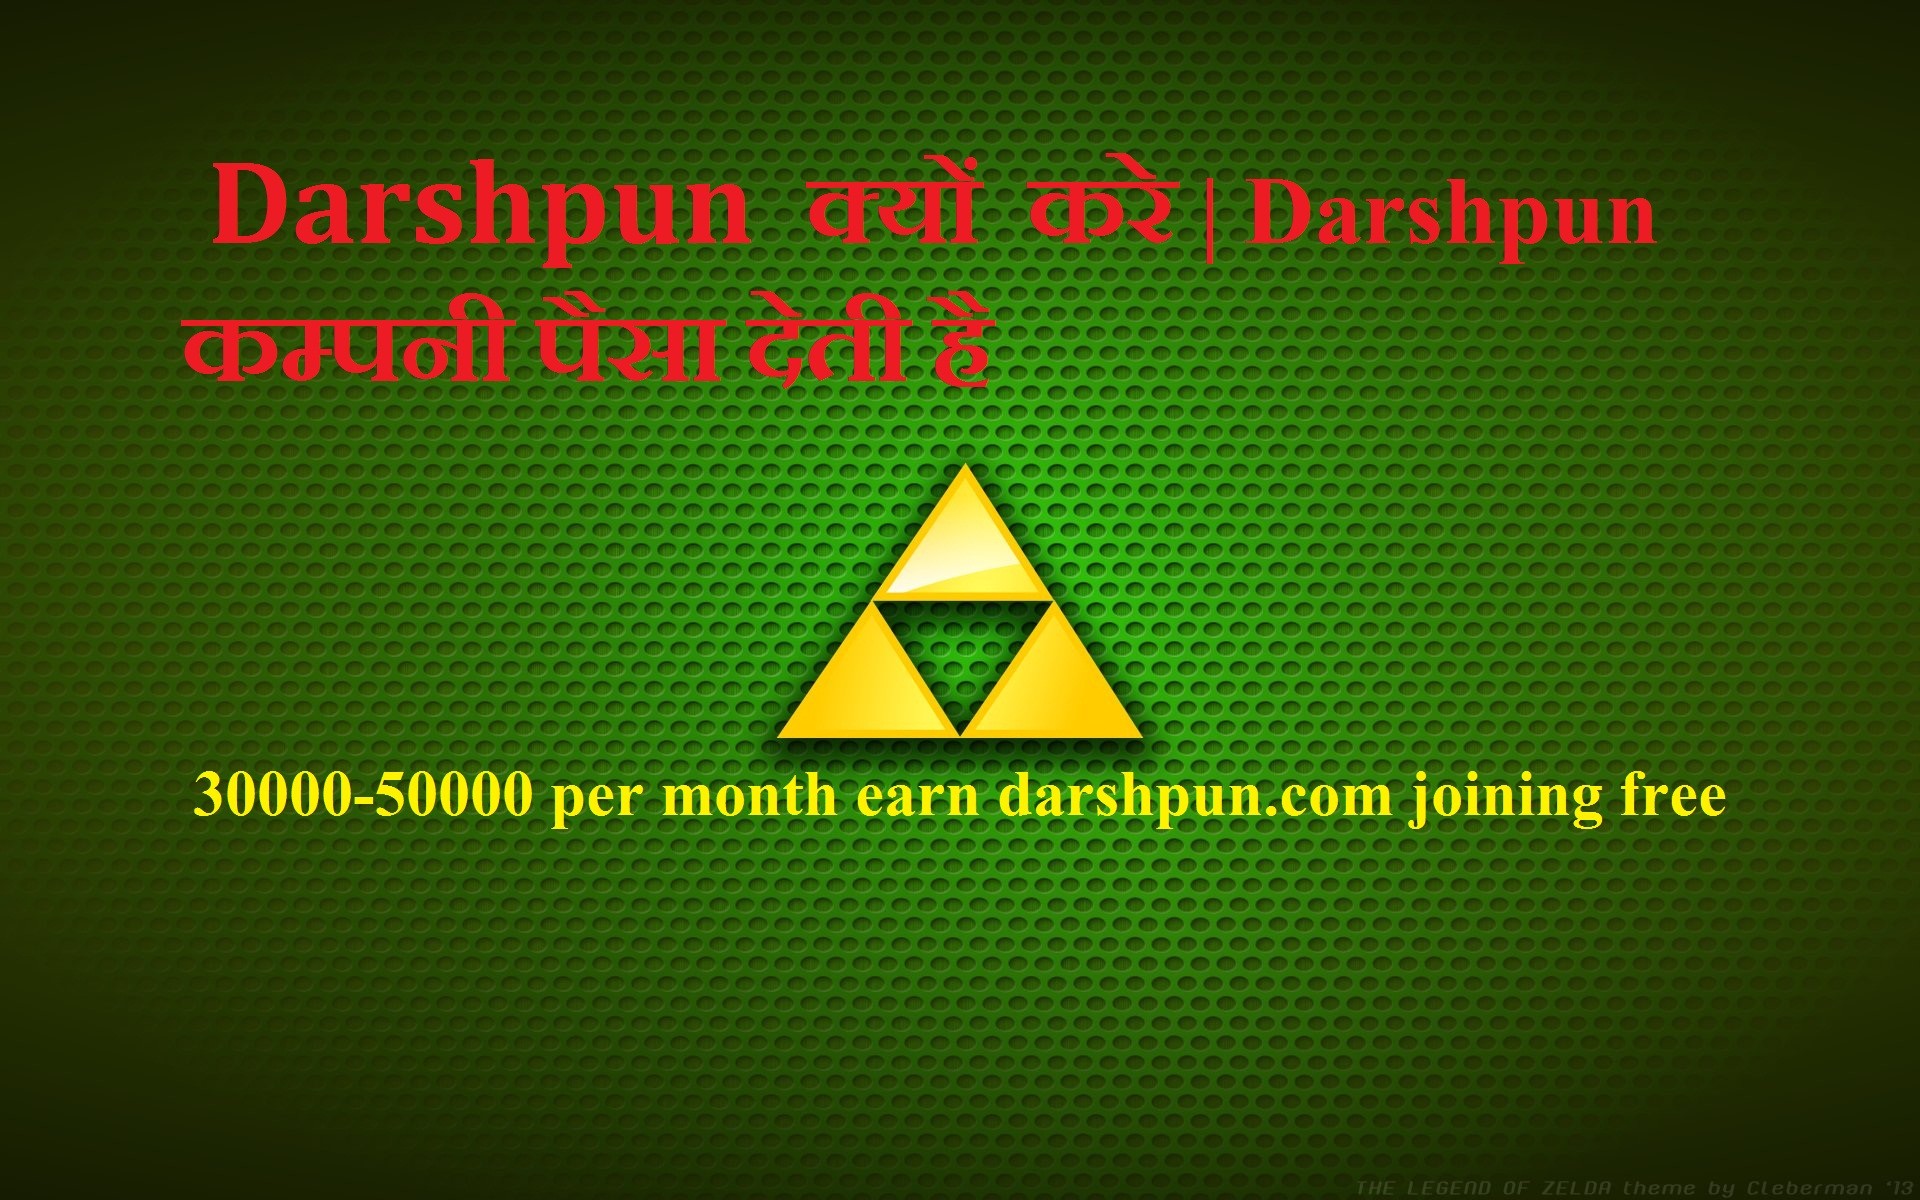 1920x1200 Darshpun Ultraplus Digitech Pvt. Ltd-Darshpun à¤à¤¯à¤¾ à¤¹à¥ | Darshpun à¤à¥à¤¯à¥à¤ à¤à¤°à¥ |  Darshpun à¤à¤®à¥à¤ªà¤¨à¥ à¤ªà¥à¤¸à¤¾ à¤¦à¥à¤¤à¥ à¤¹à¥